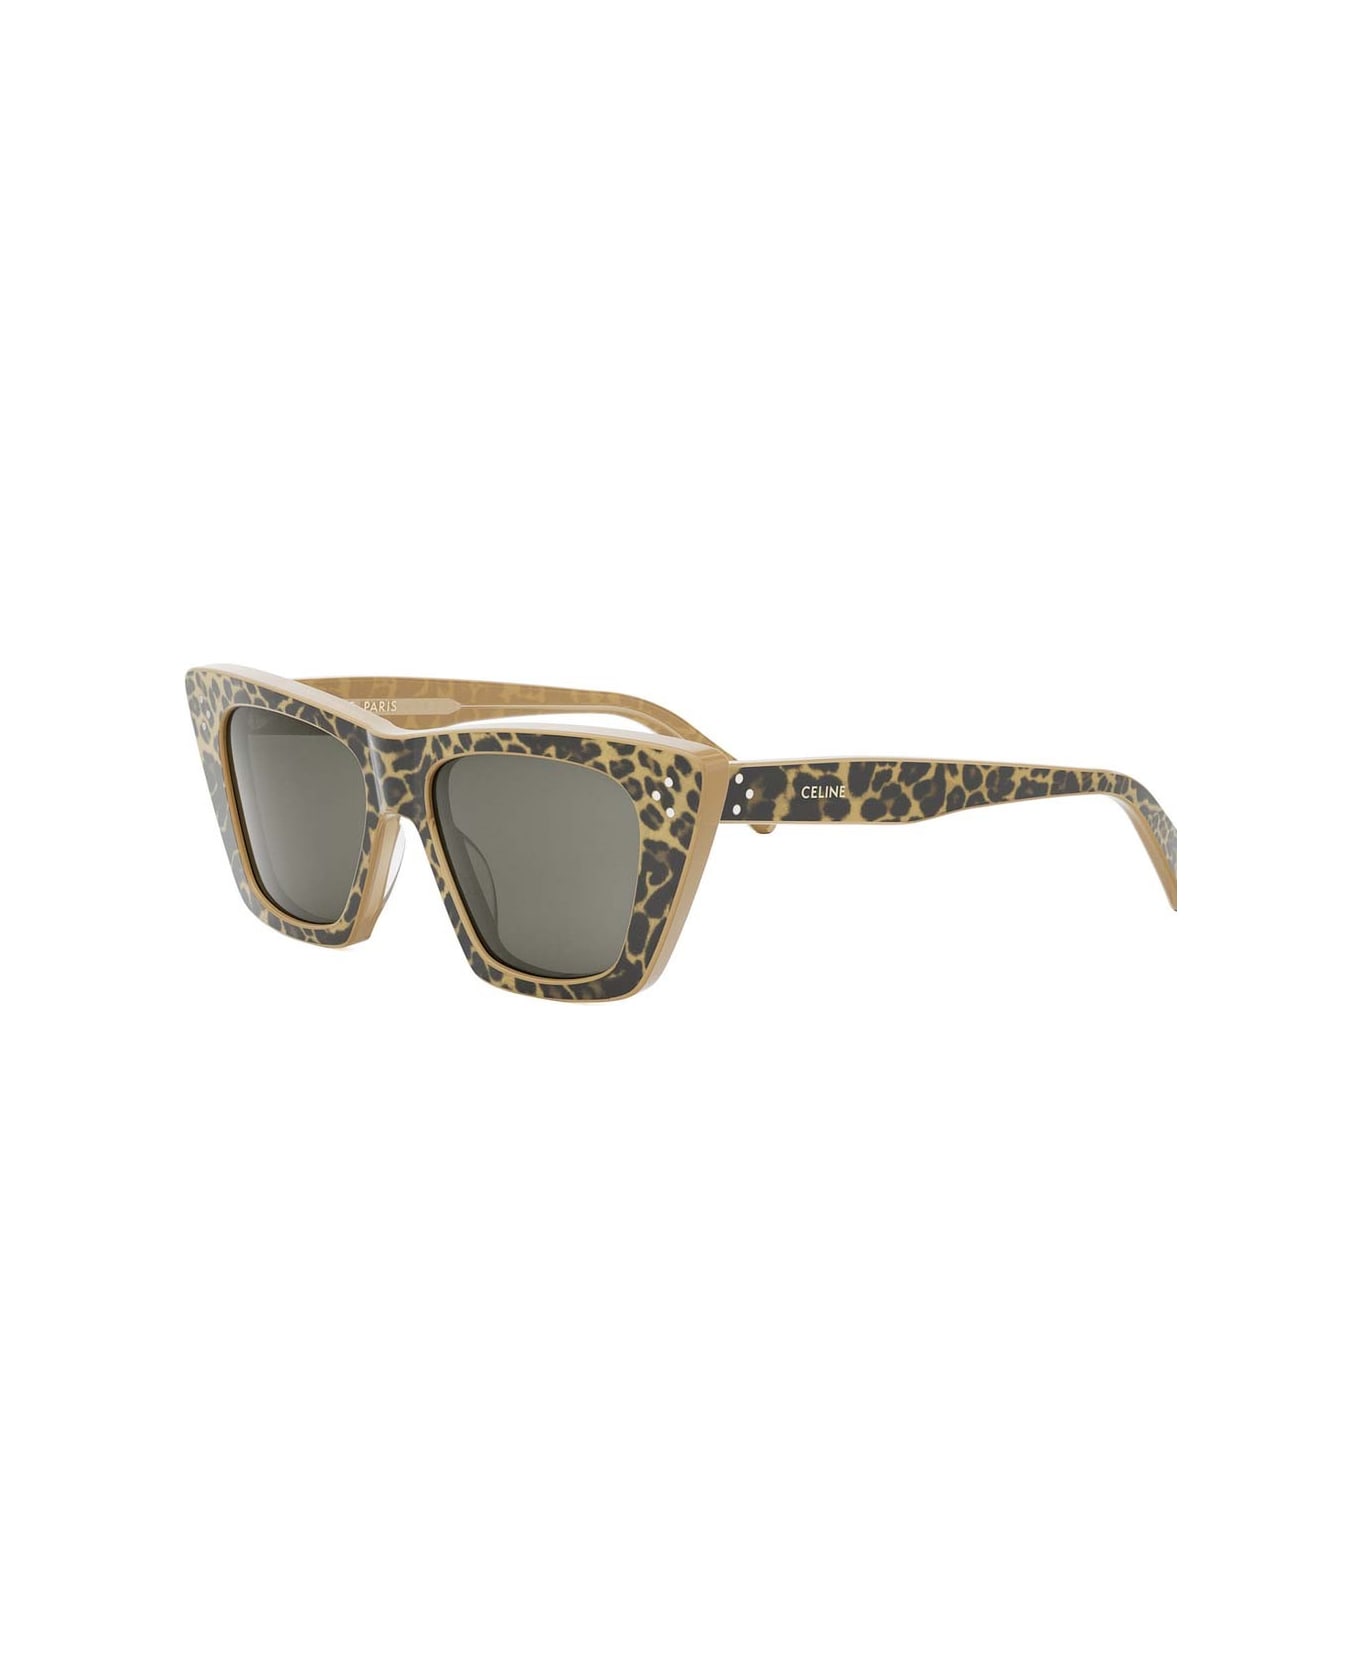 Celine Sunglasses - Leopardato/Oro/Grigio